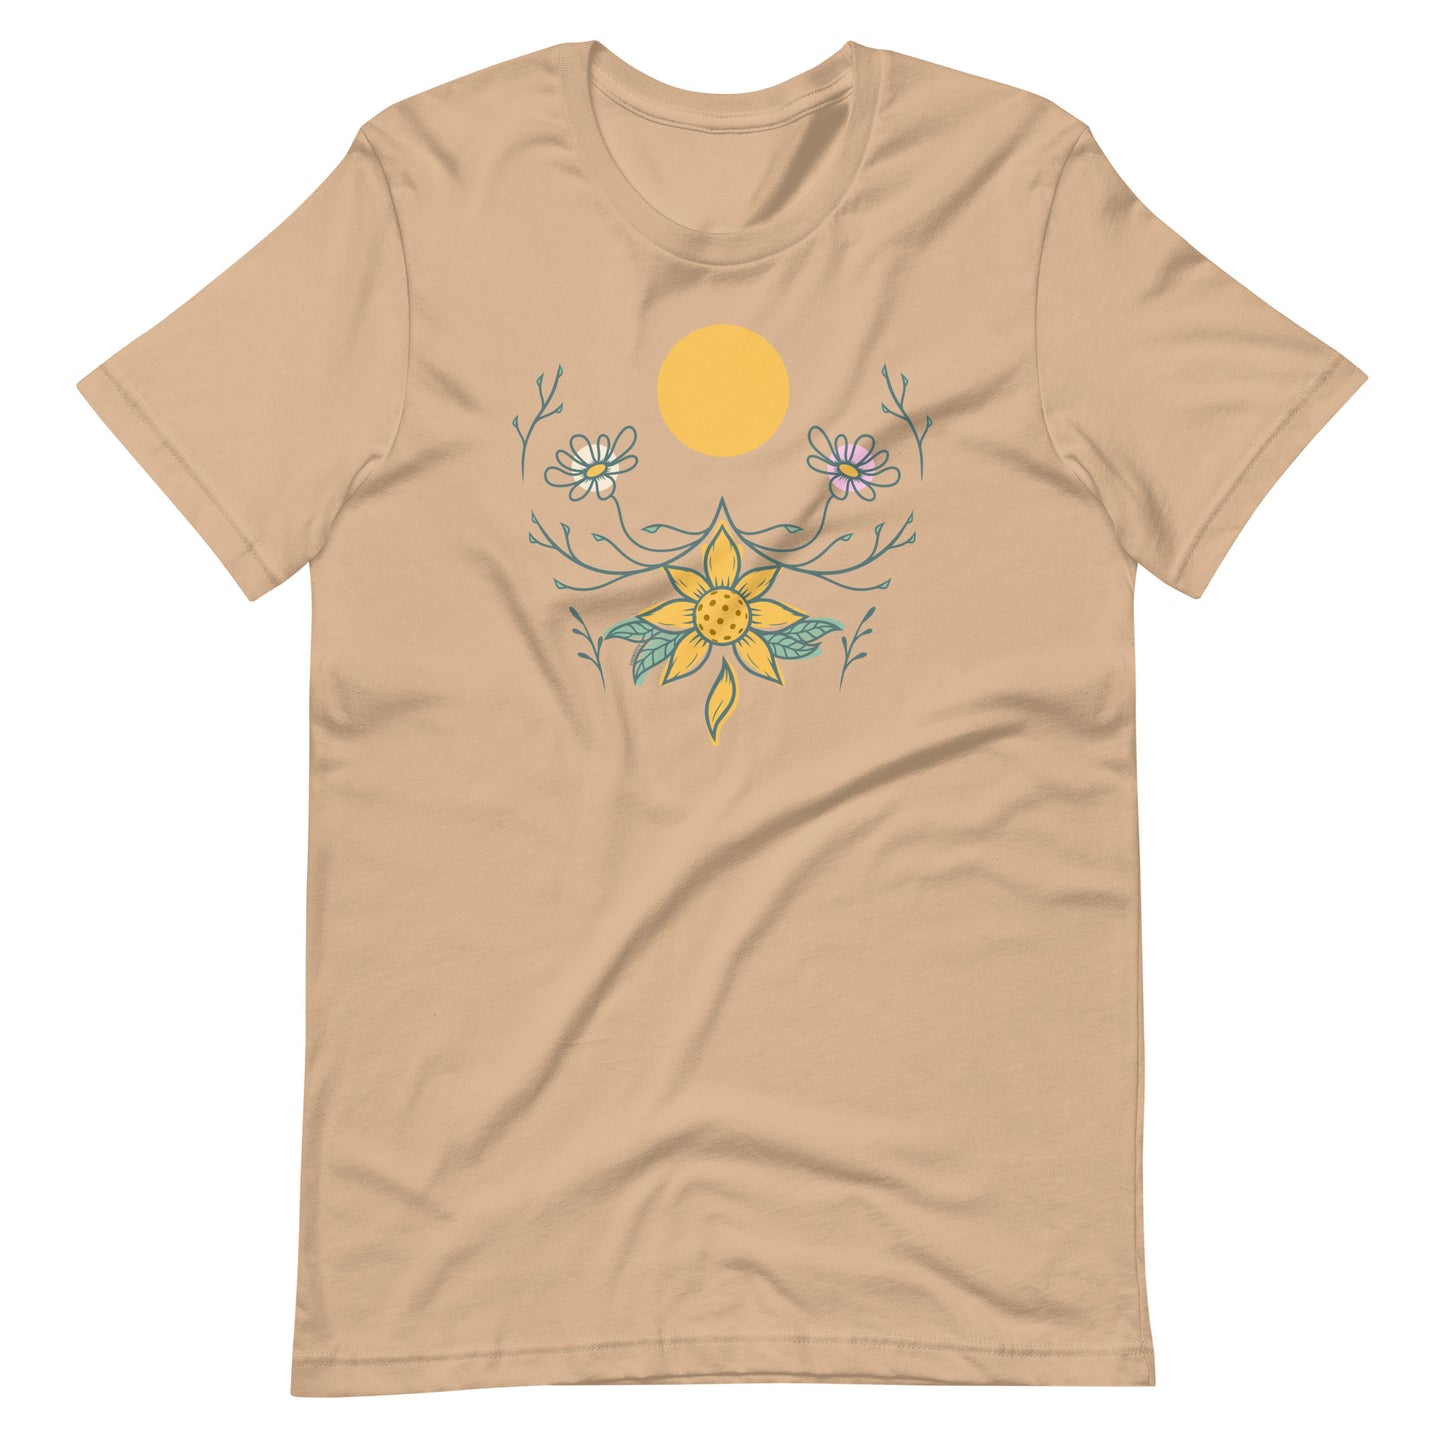 Fun Pickleball Sunset Graphic: "Pickleball Daisy," Womens Unisex Tan T-Shirt